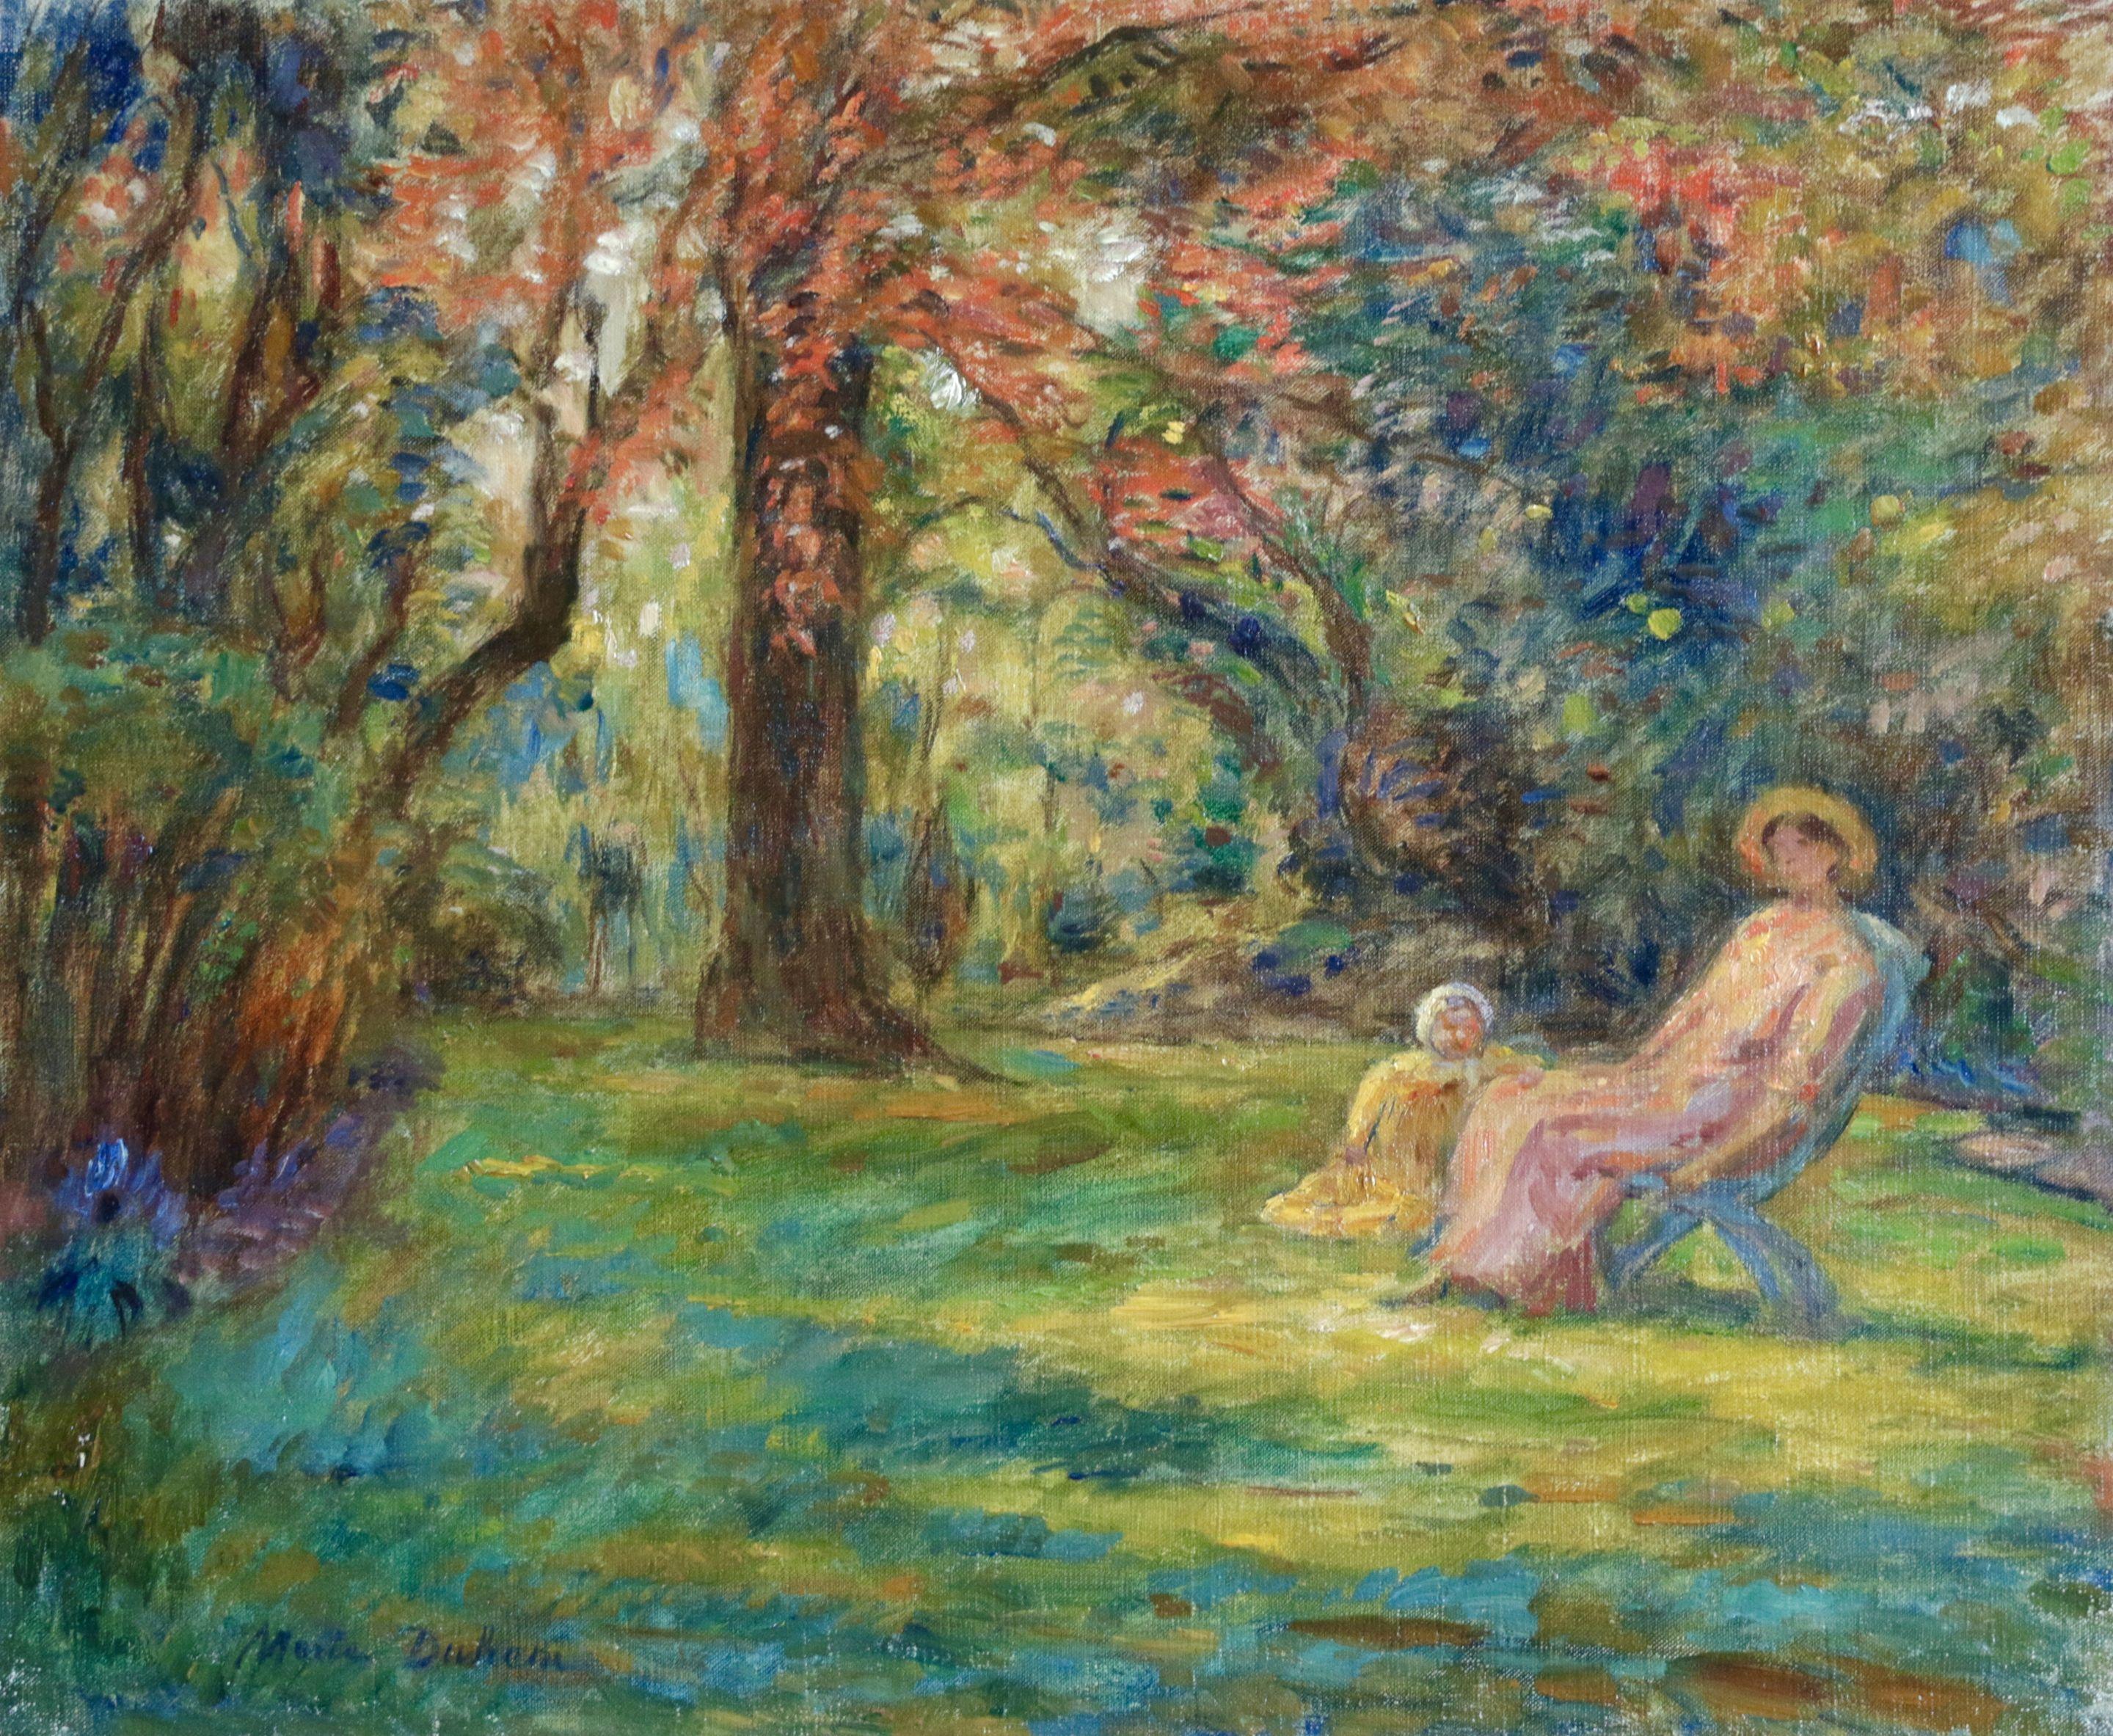 Marie Duhem Figurative Painting - "Famille dans le Jardin" Duhem 19th Century French Impressionist Green Garden